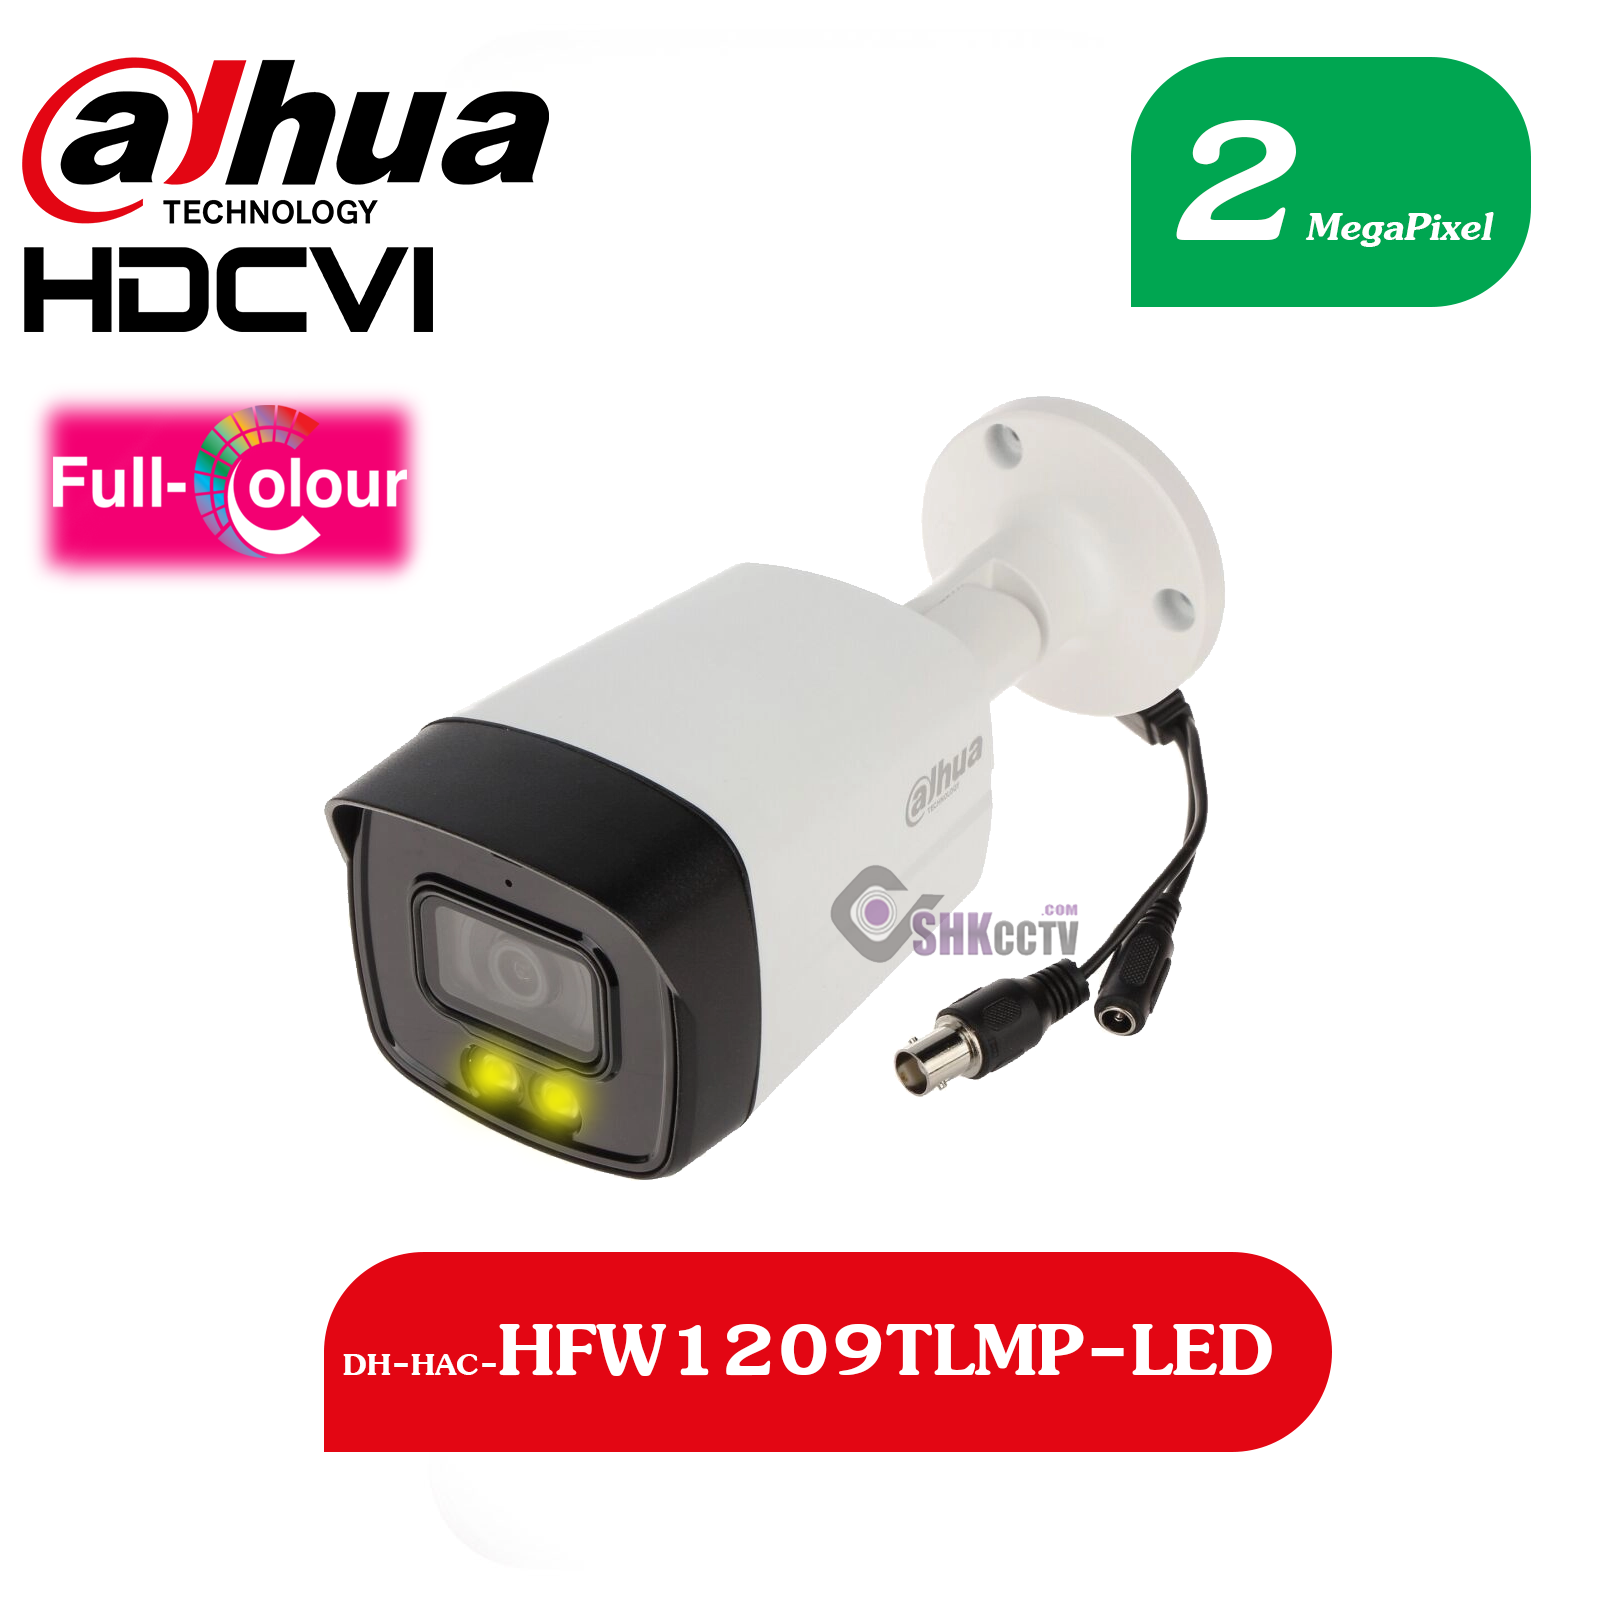 DH-HAC-HFW1209TLMP-LED